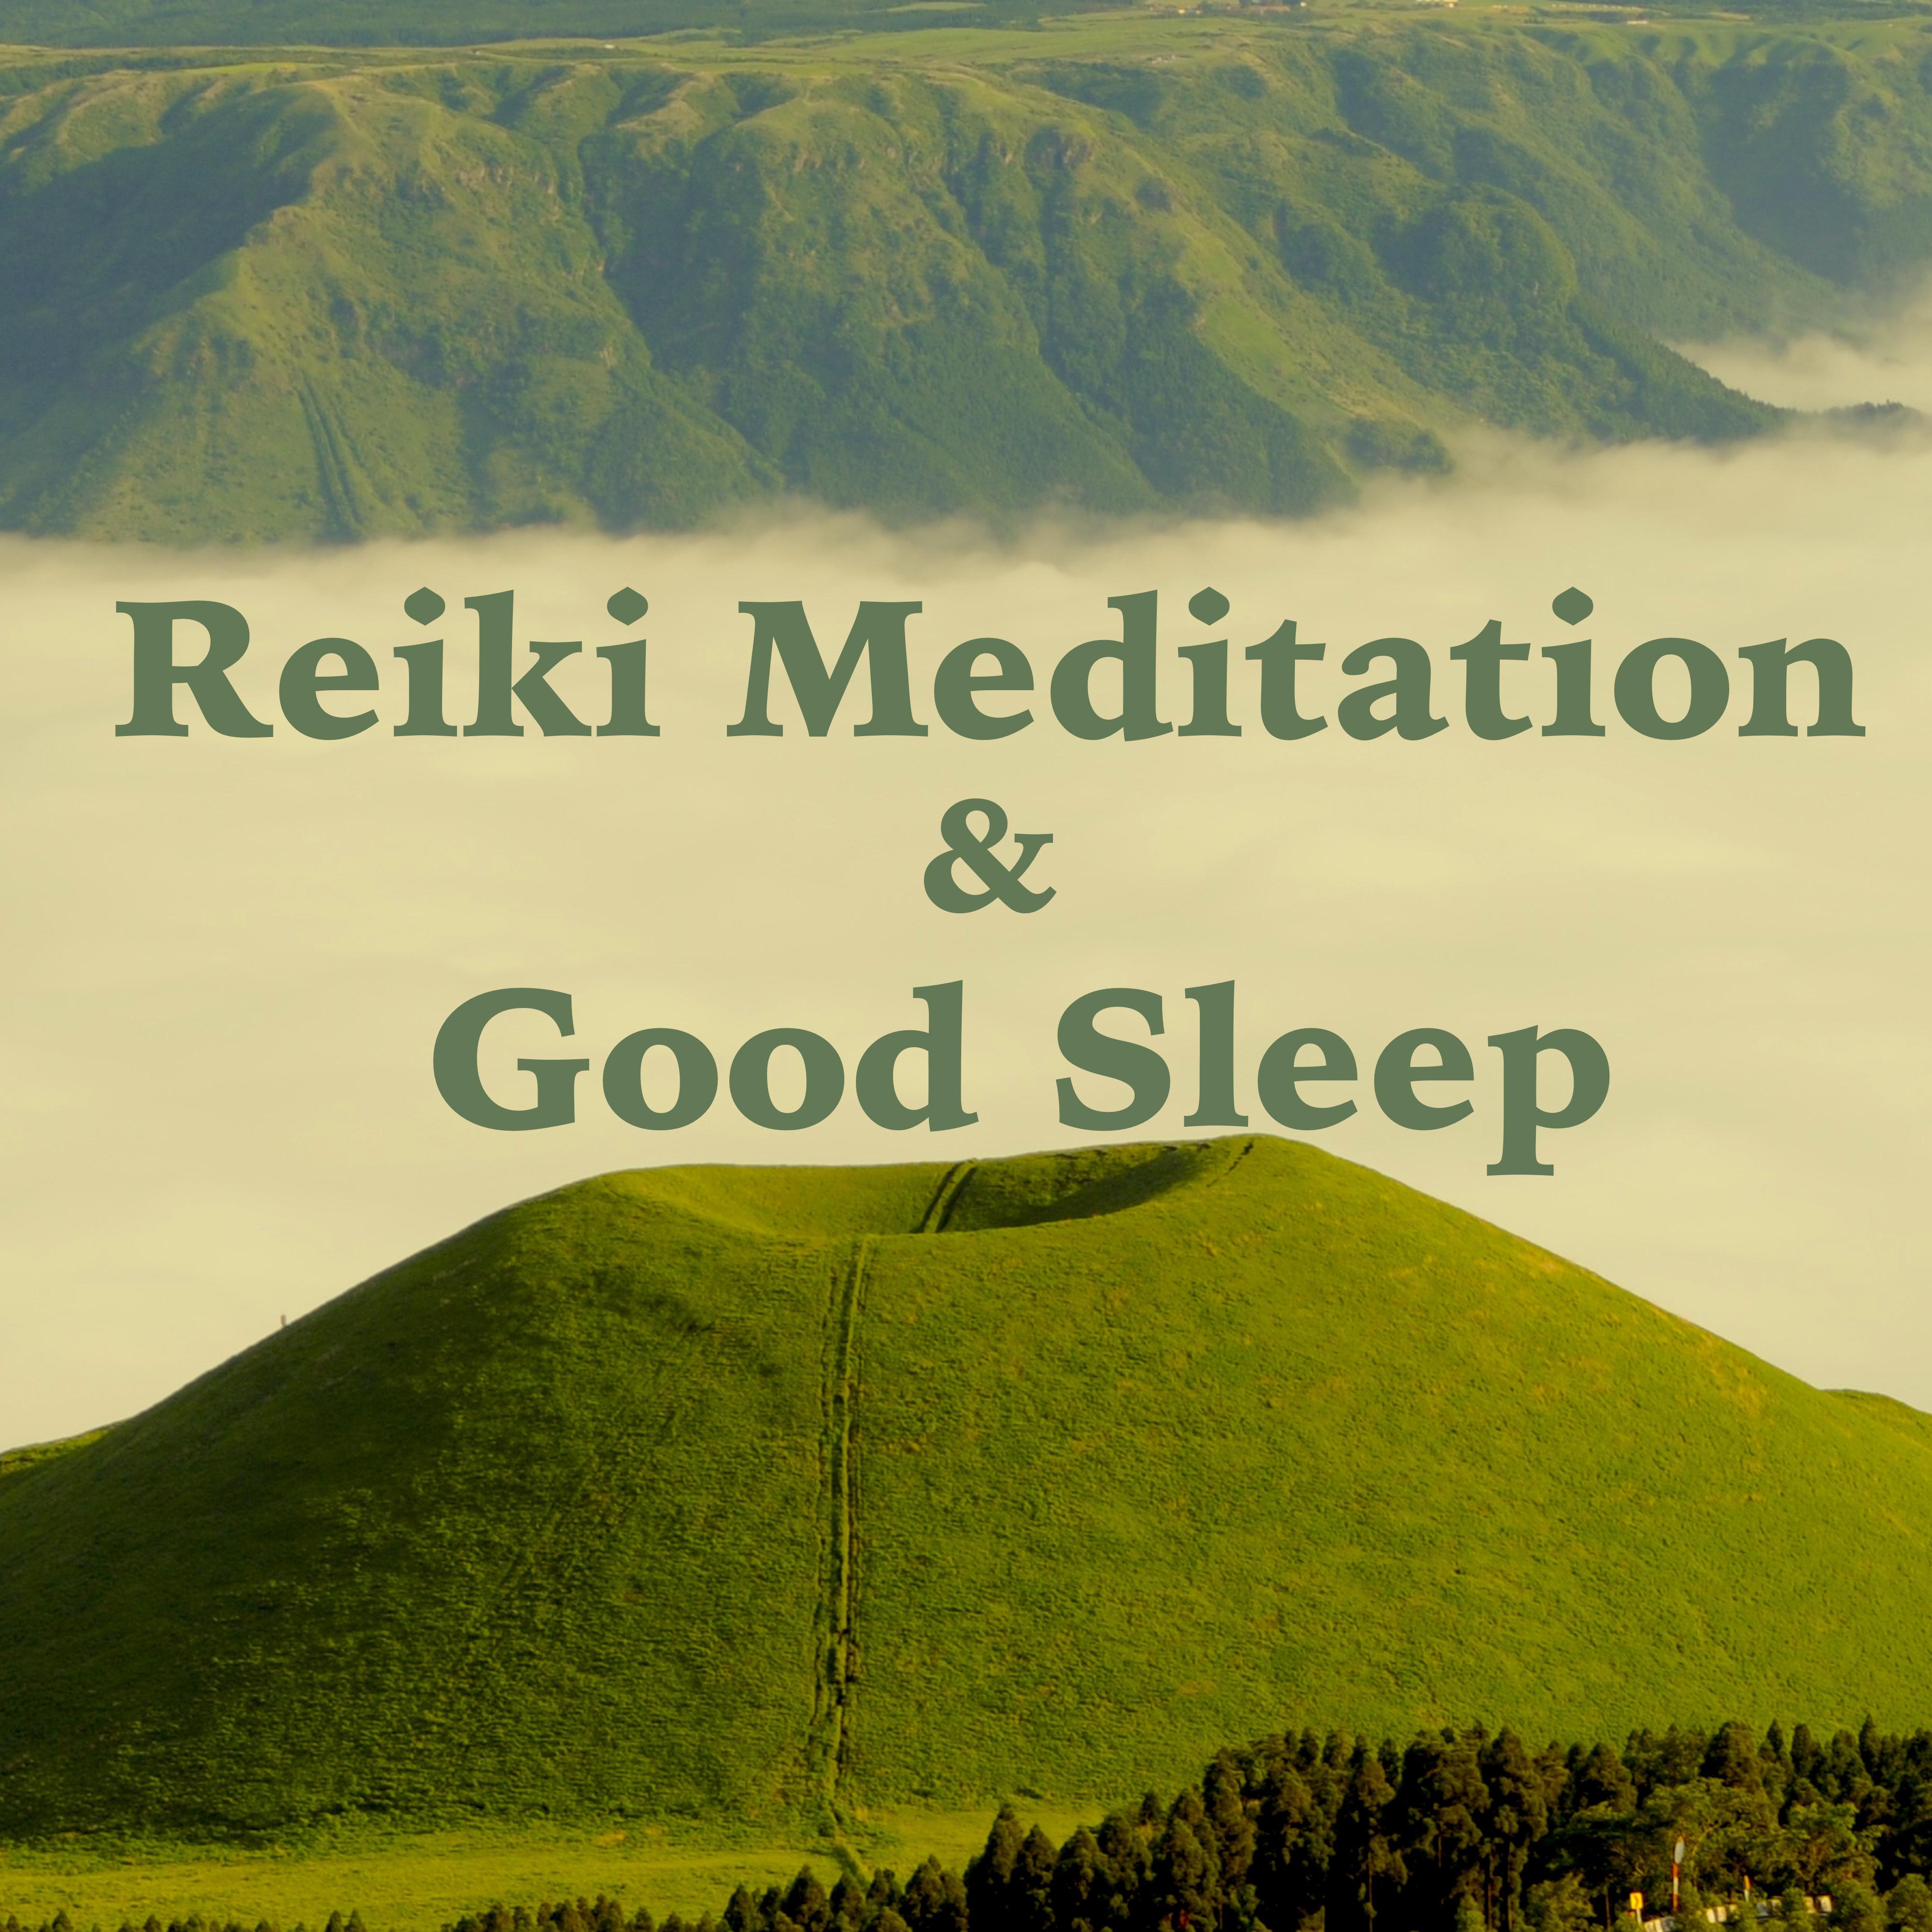 Reiki Meditation & Good Sleep: Best Piano Music for Mindfulness Meditation, Relaxation & Deep Sleep Inducing – Sounds of Nature & Healing Music